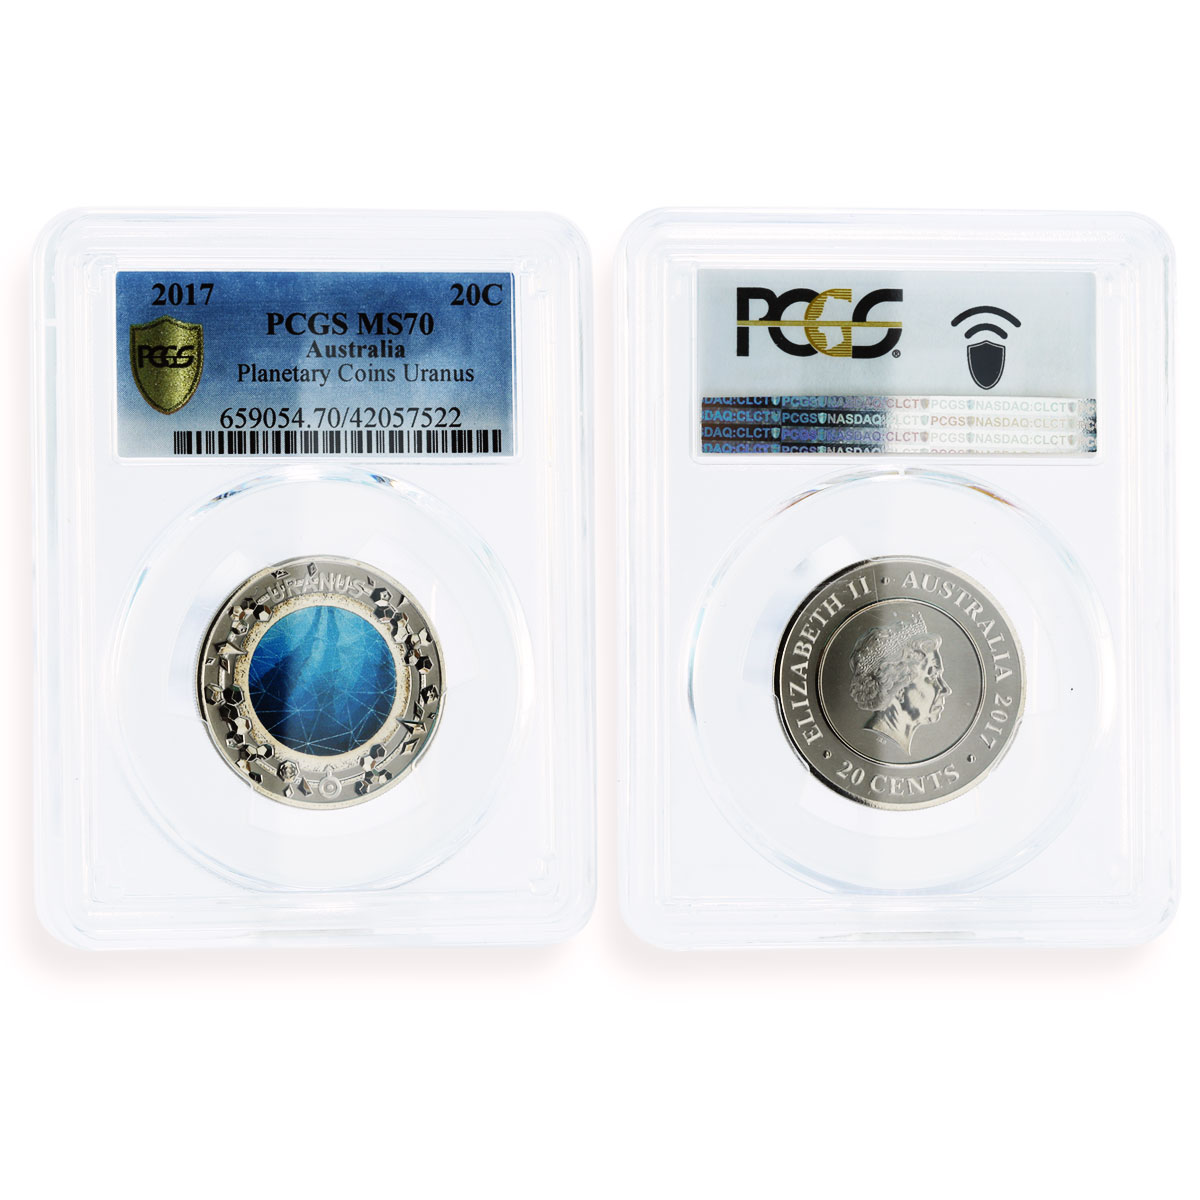 Australia set of 10 coins Planetary Coins Mars Sun Earth MS 68 - 70 PCGS 2017